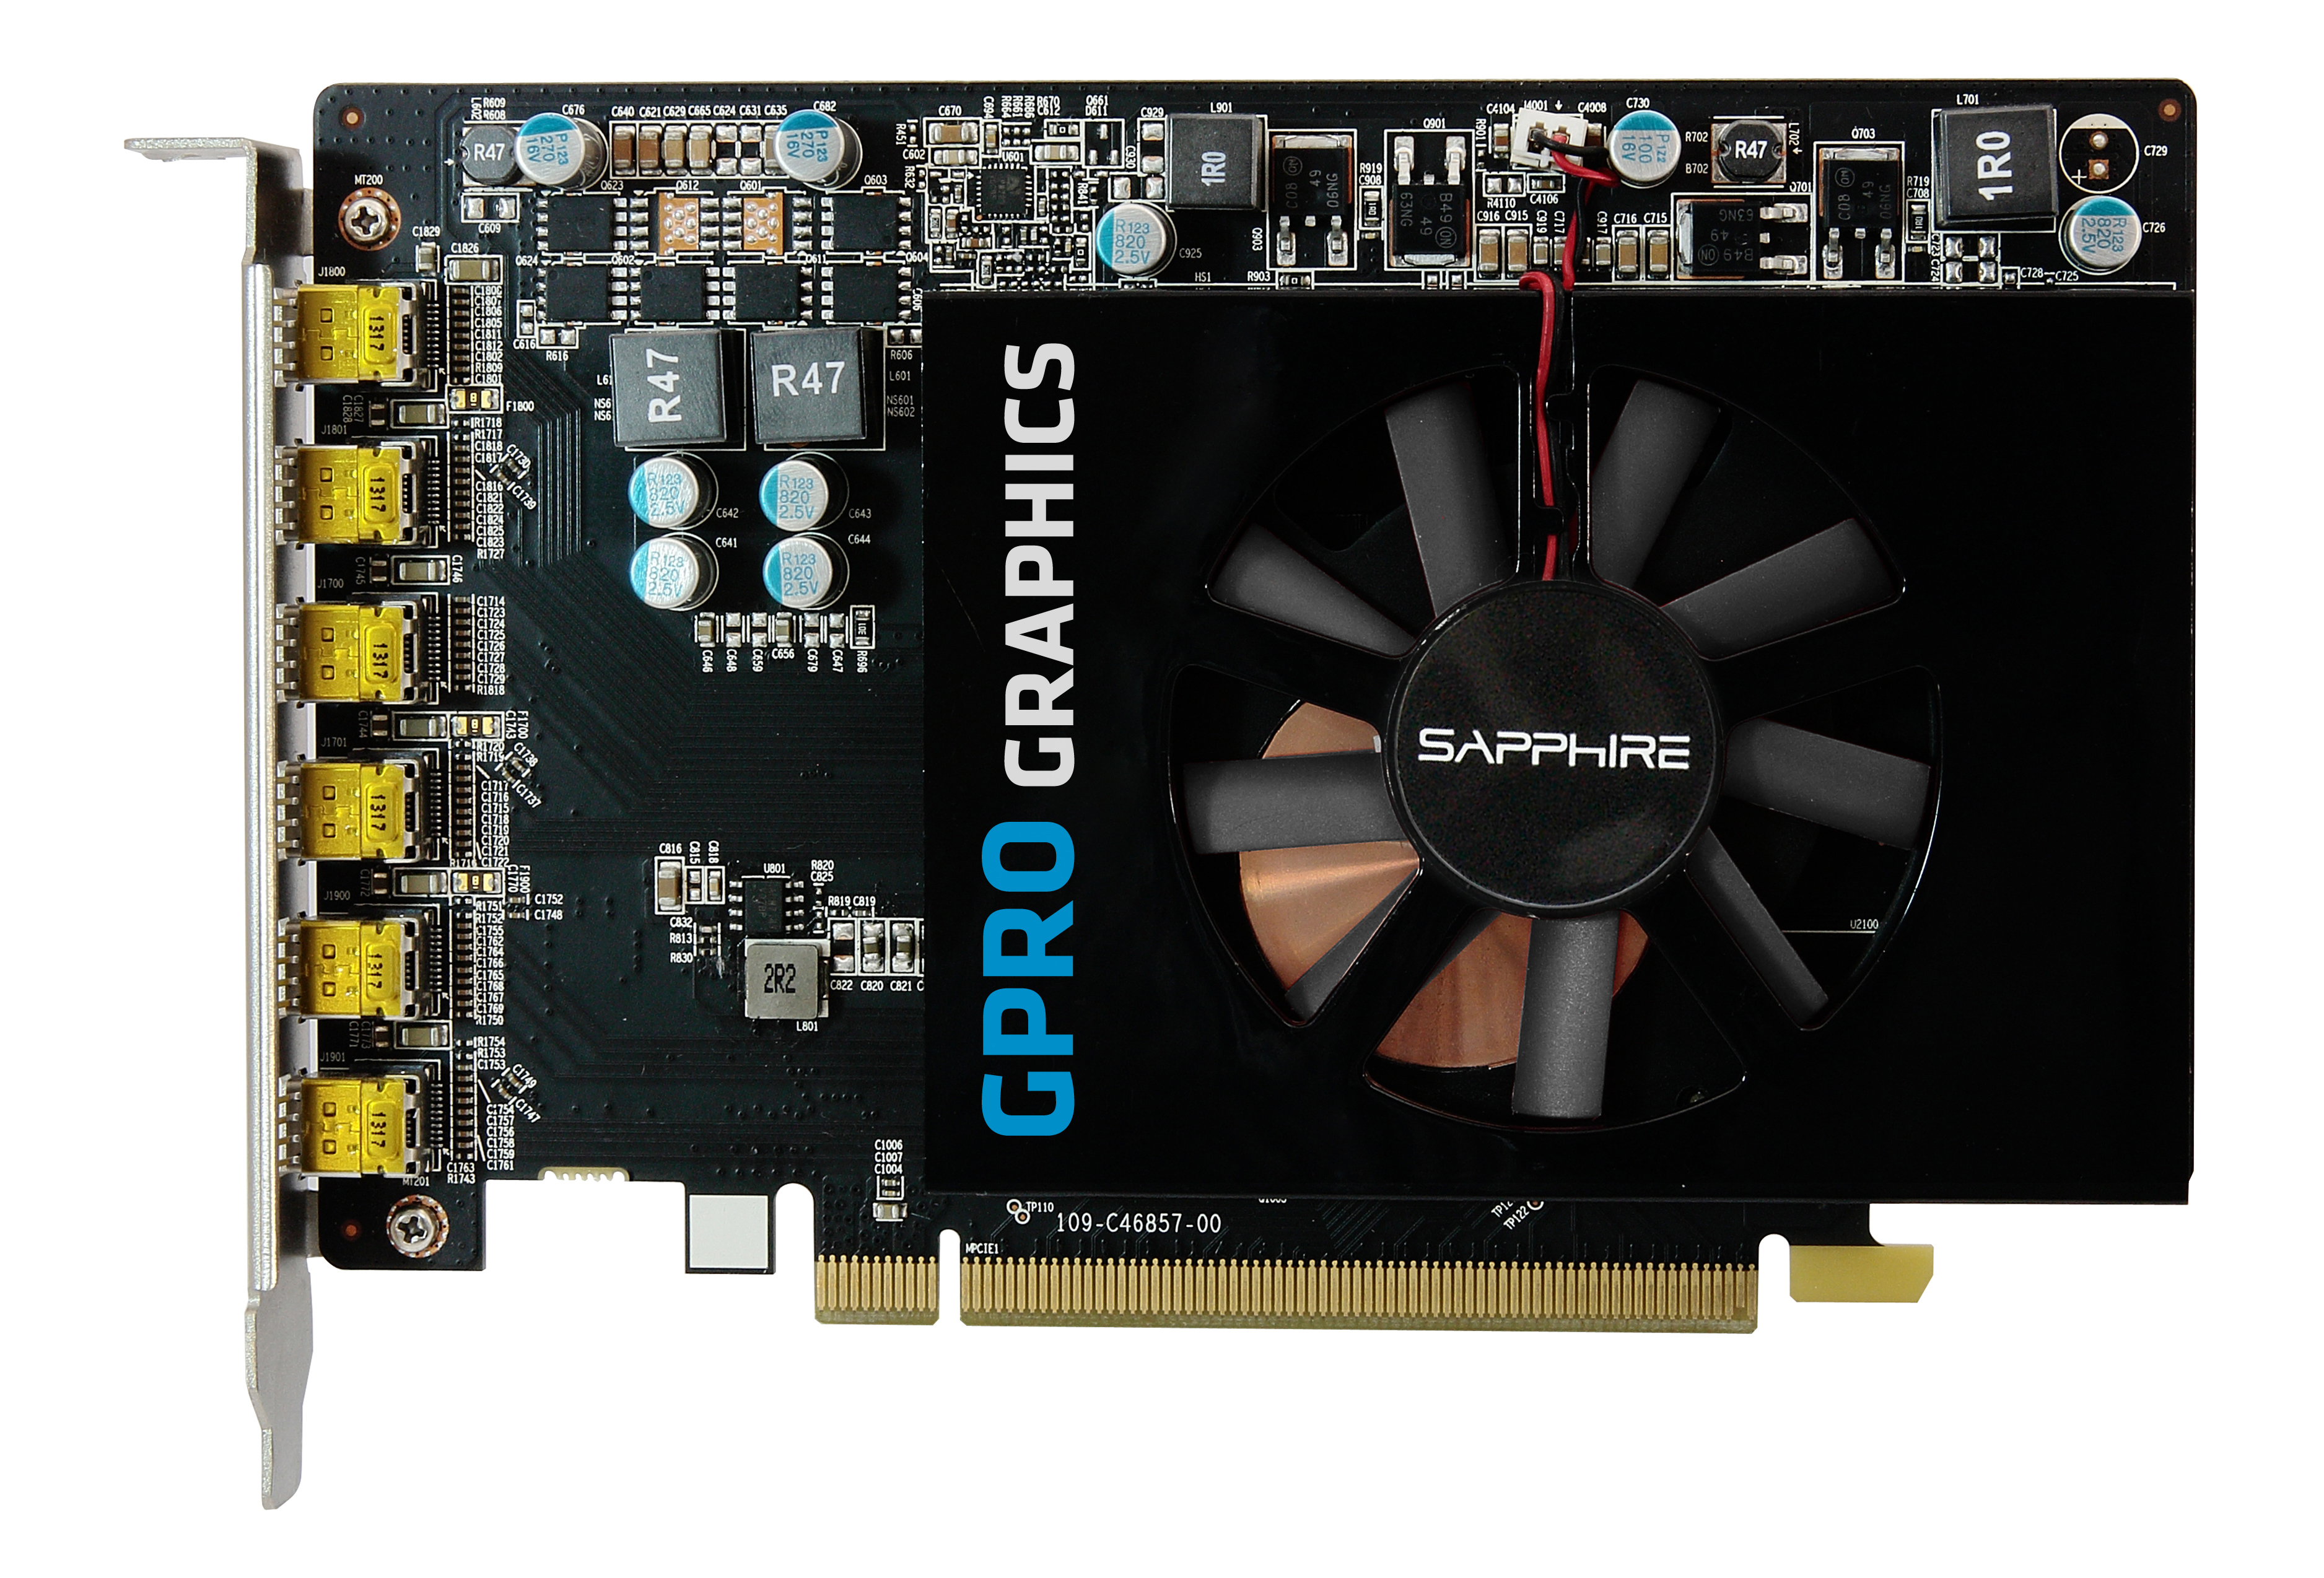 SAPPHIRE GPRO 6200 Grafikkarte) (AMD, (32258-00-21G) 4GB